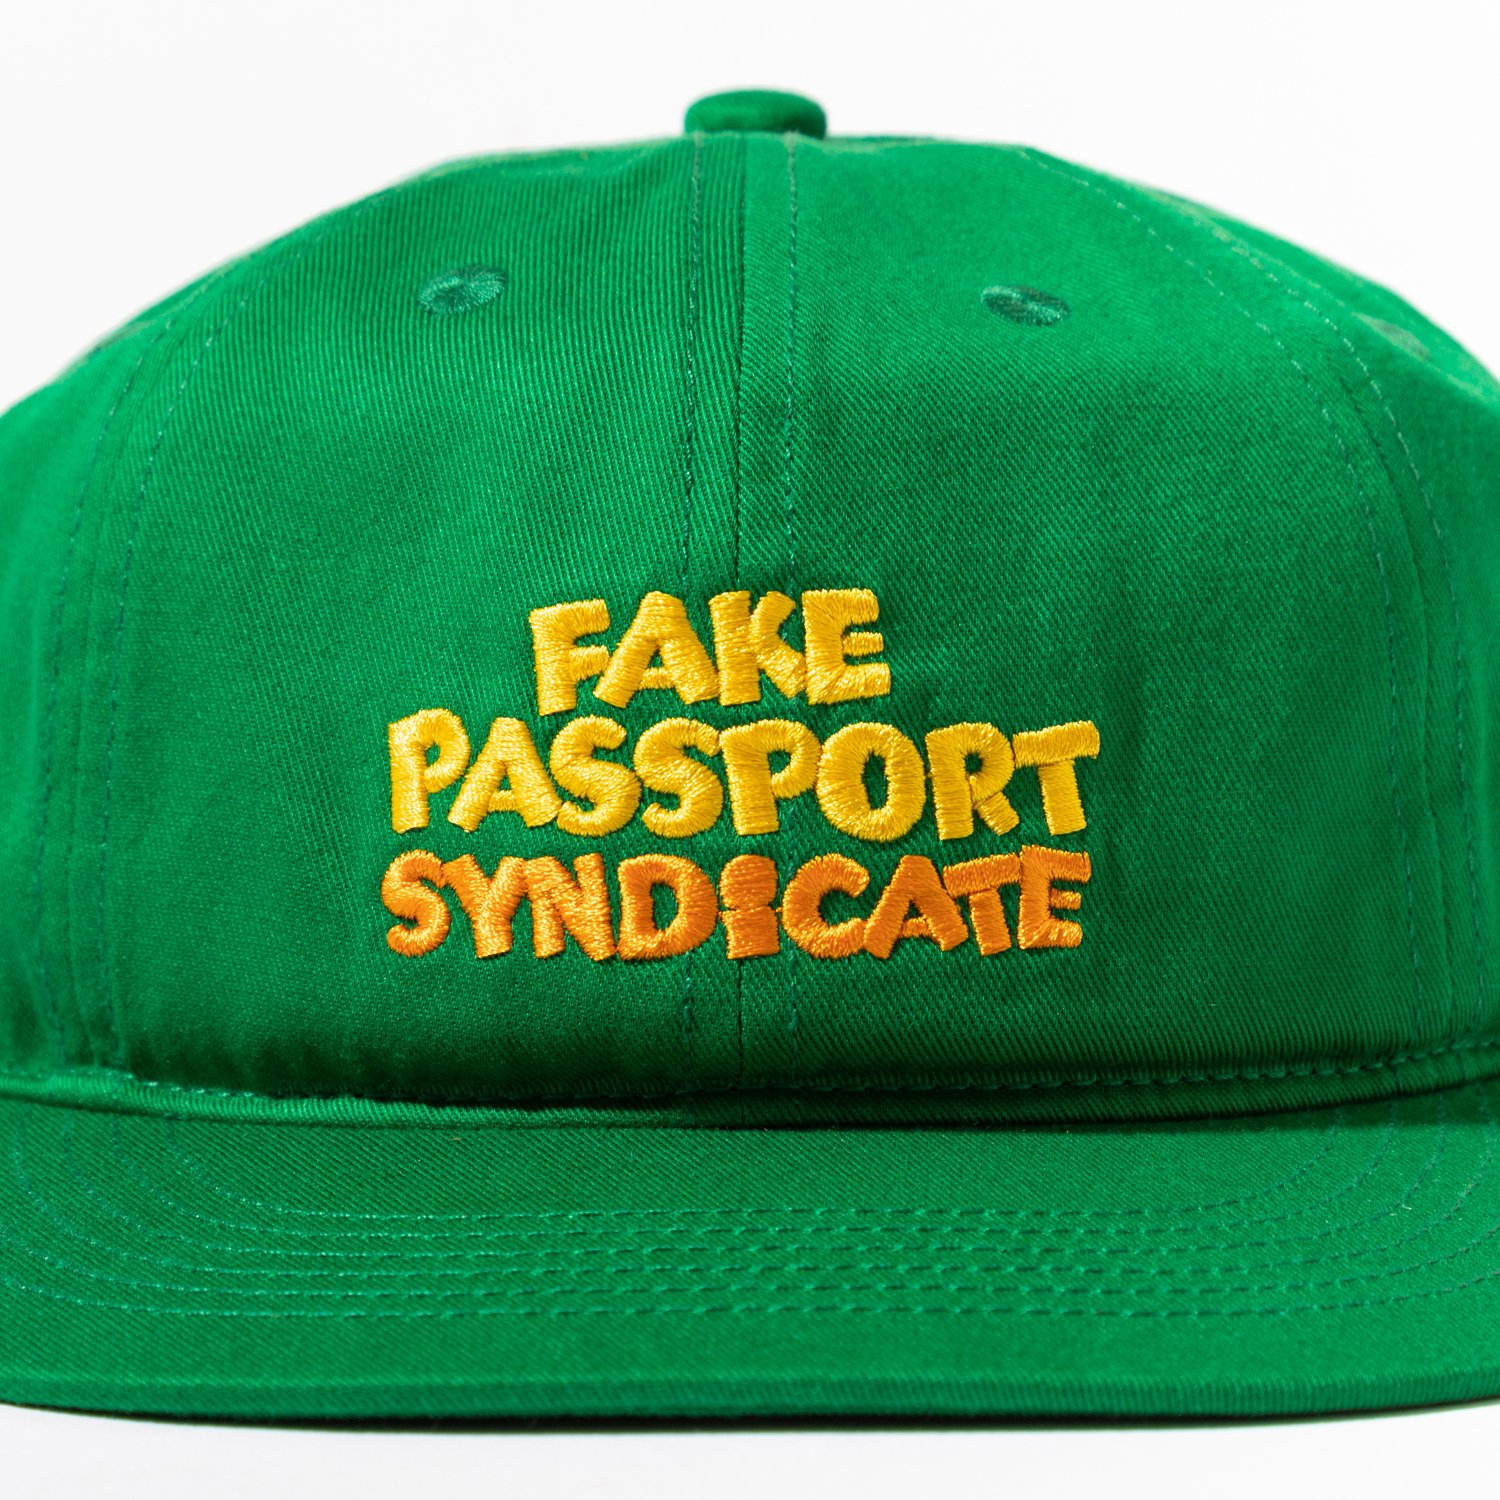 FAKE PASSPORT SYNDICATE CAP designed by Jerry UKAI - TACOMA FUJI